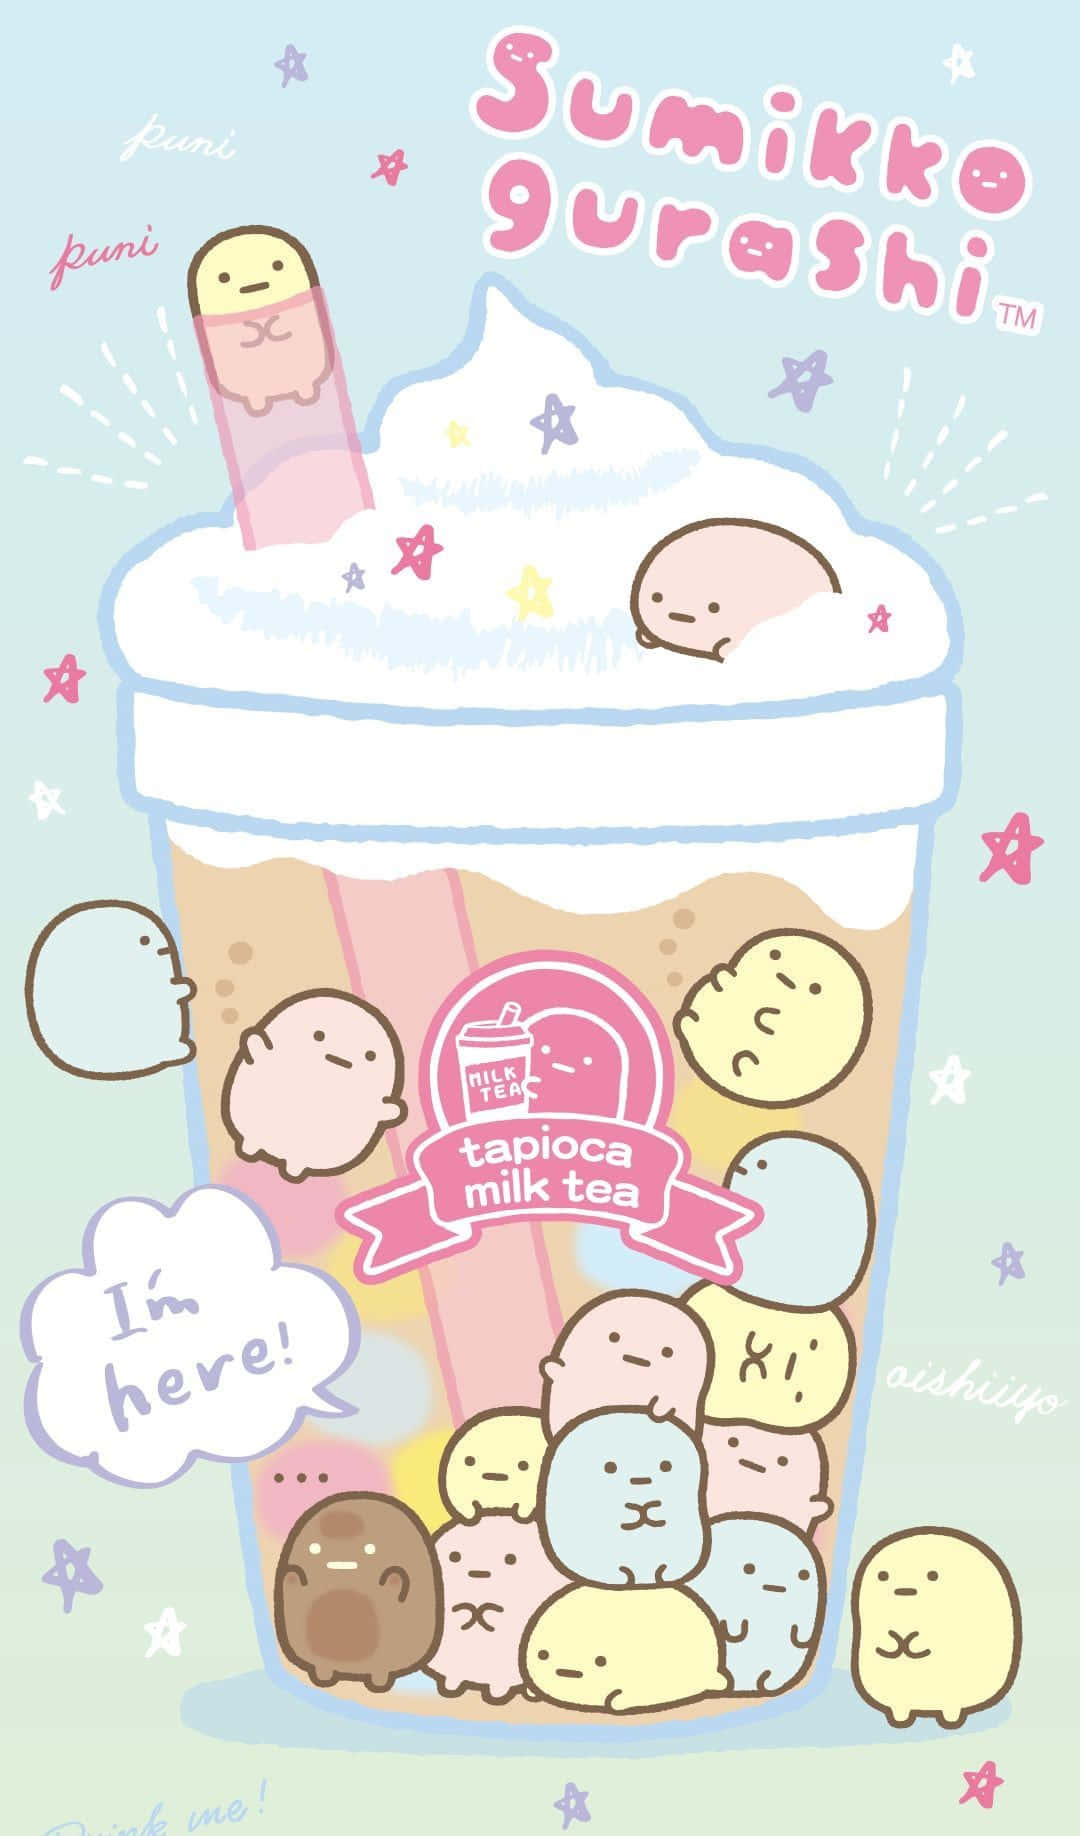 Enjoy your favorite bubble tea beverage with your friends!